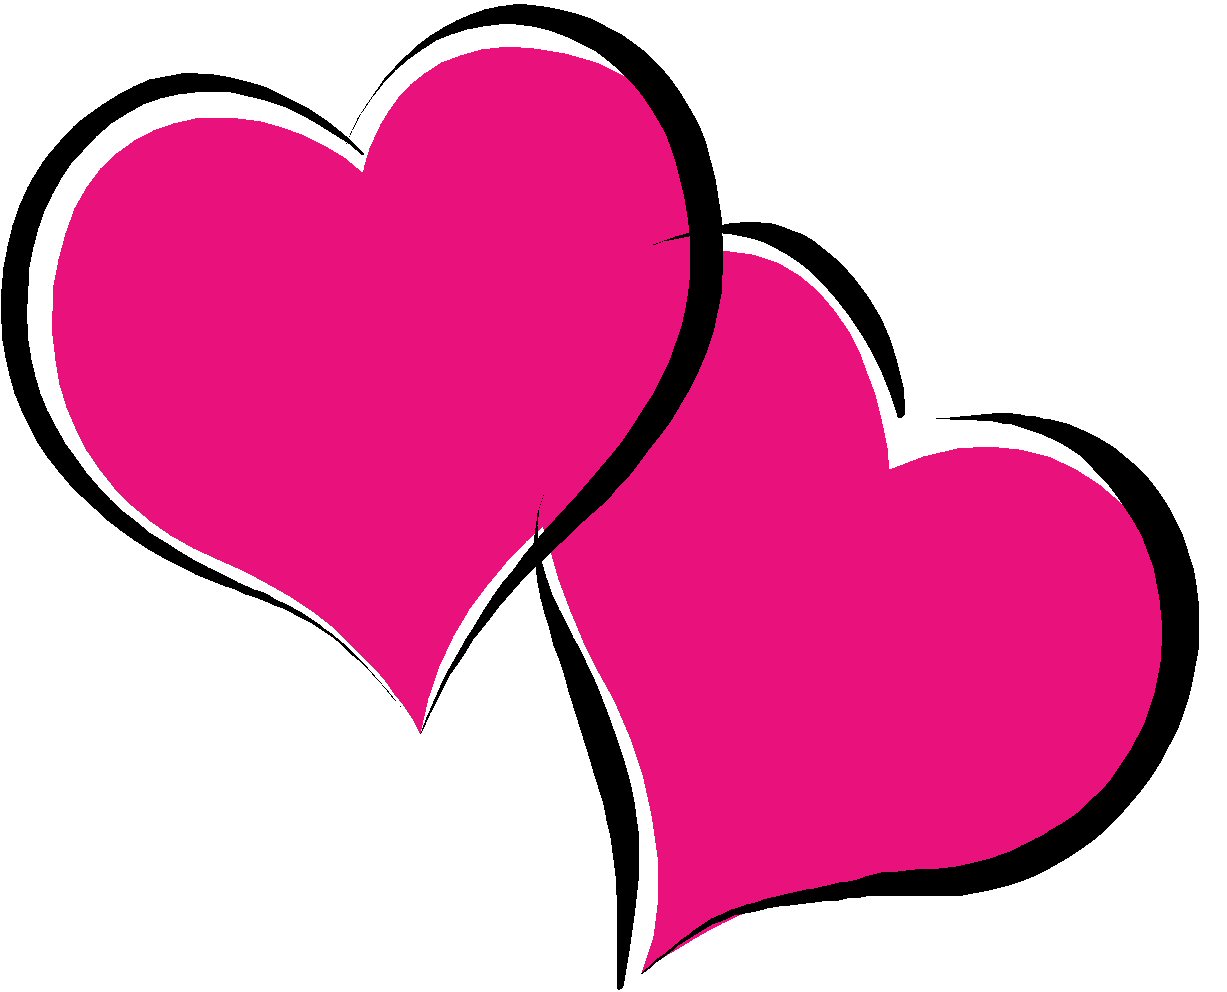 Hearts heart clip art images